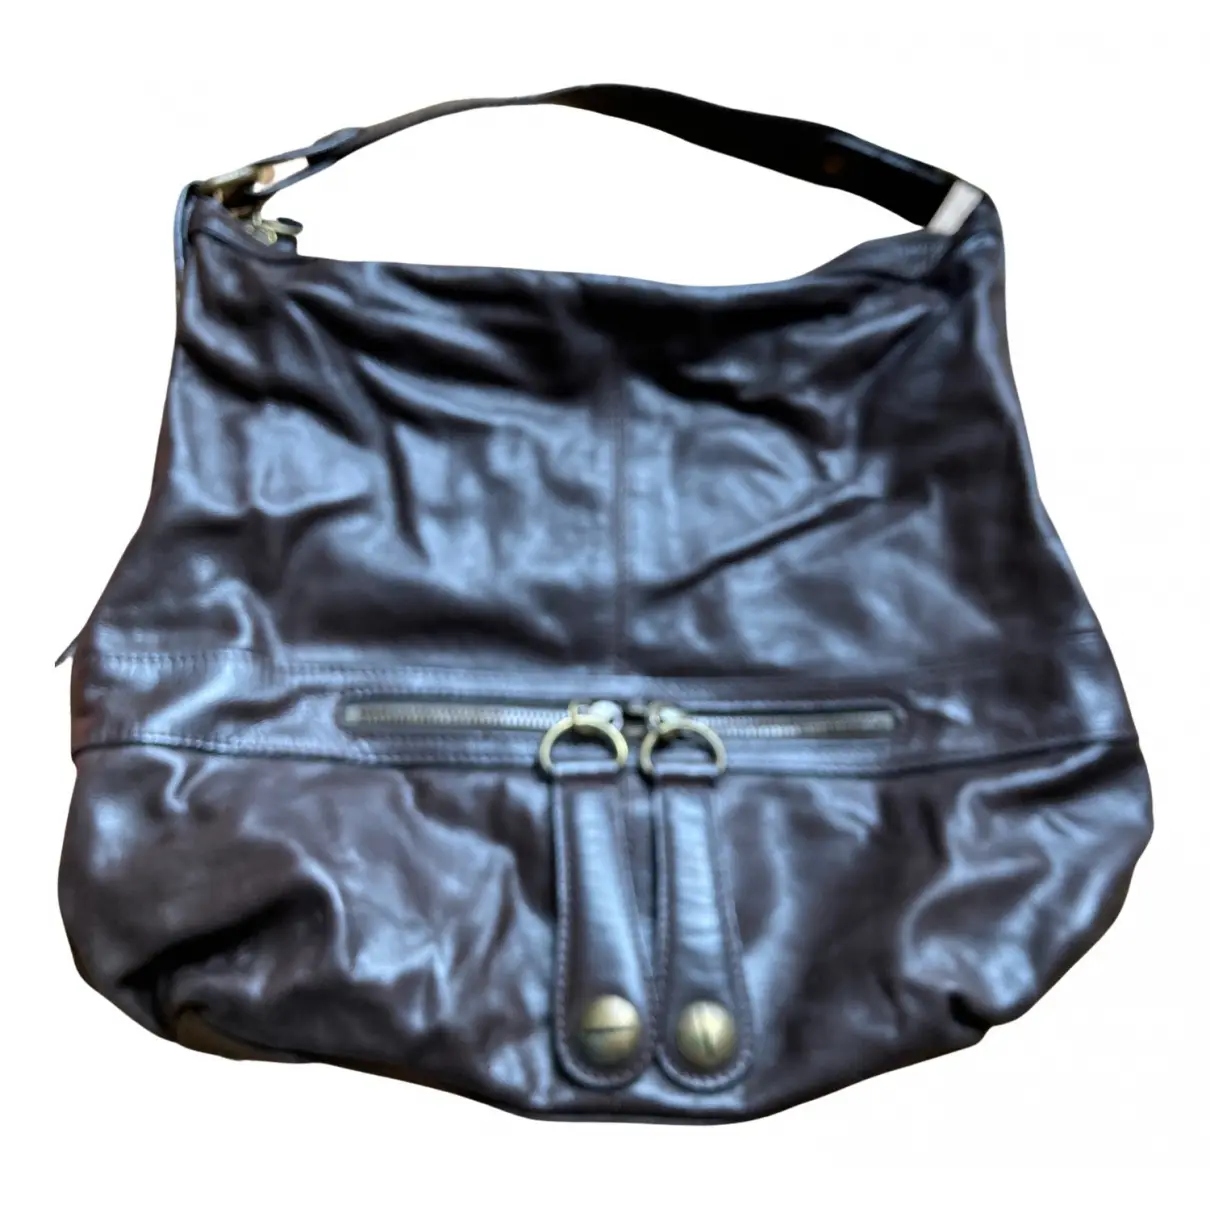 Midday Midnight leather handbag Gerard Darel